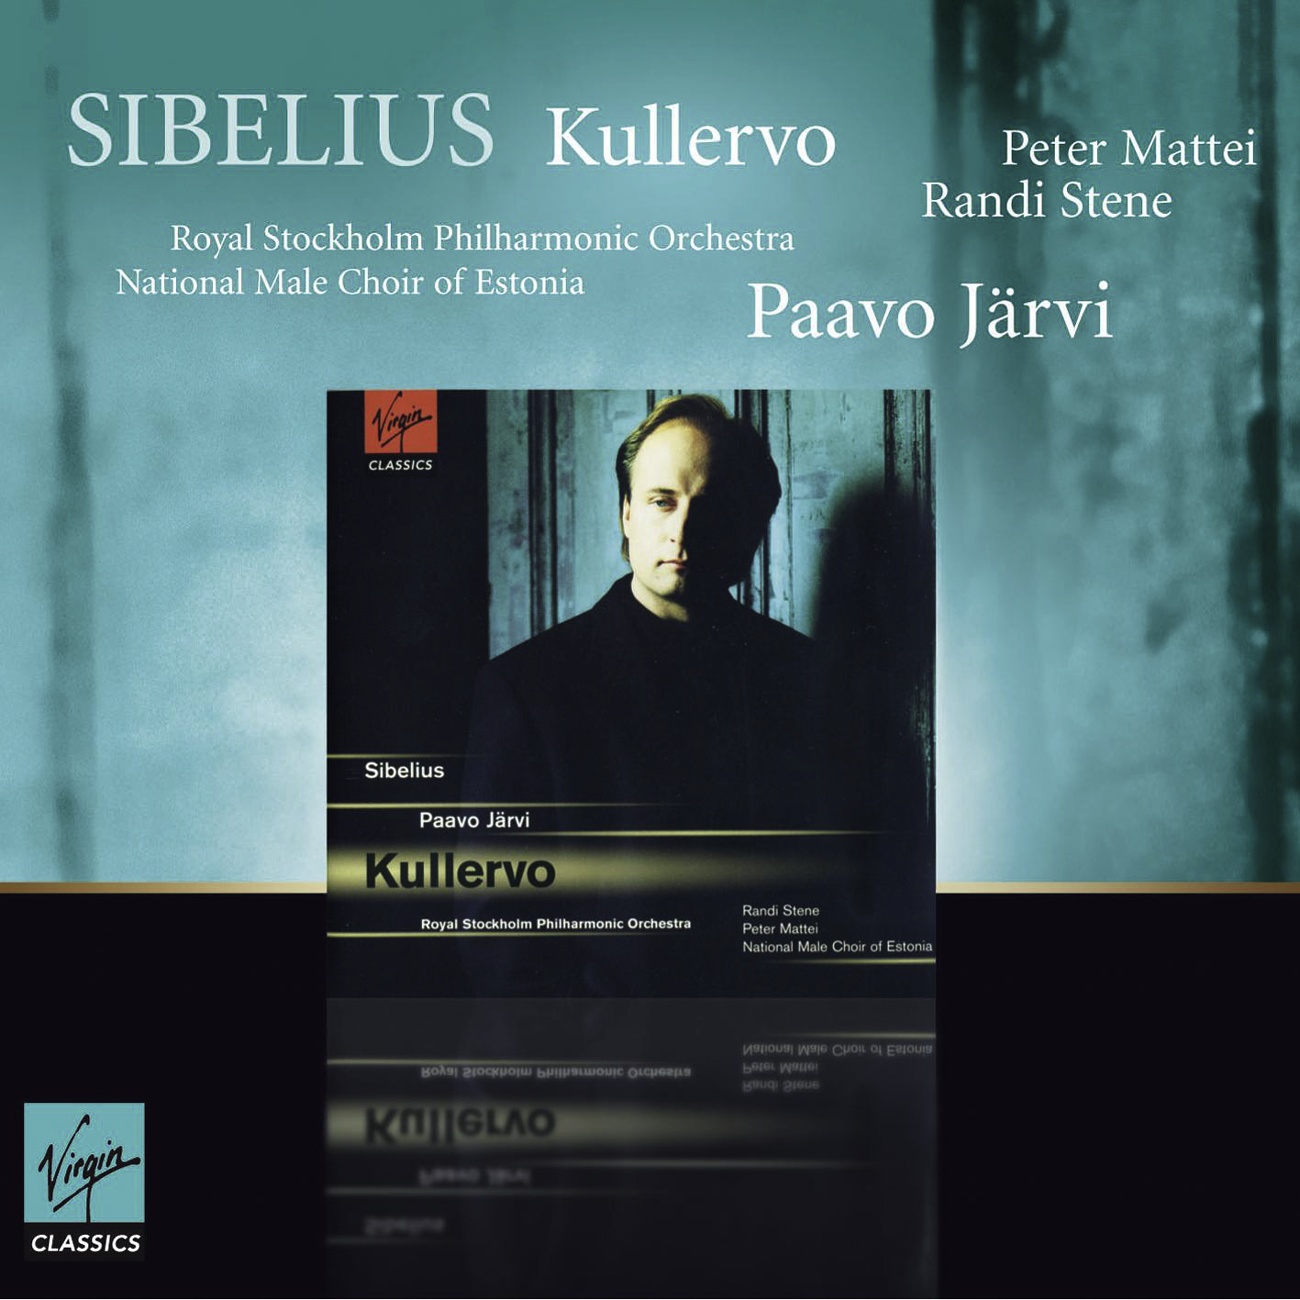 Kullervo - Symphonisches Gedicht, Op. 7, fur Soli, Chor und Orchester (Kalevala): I - Introduction - Allegro moderato